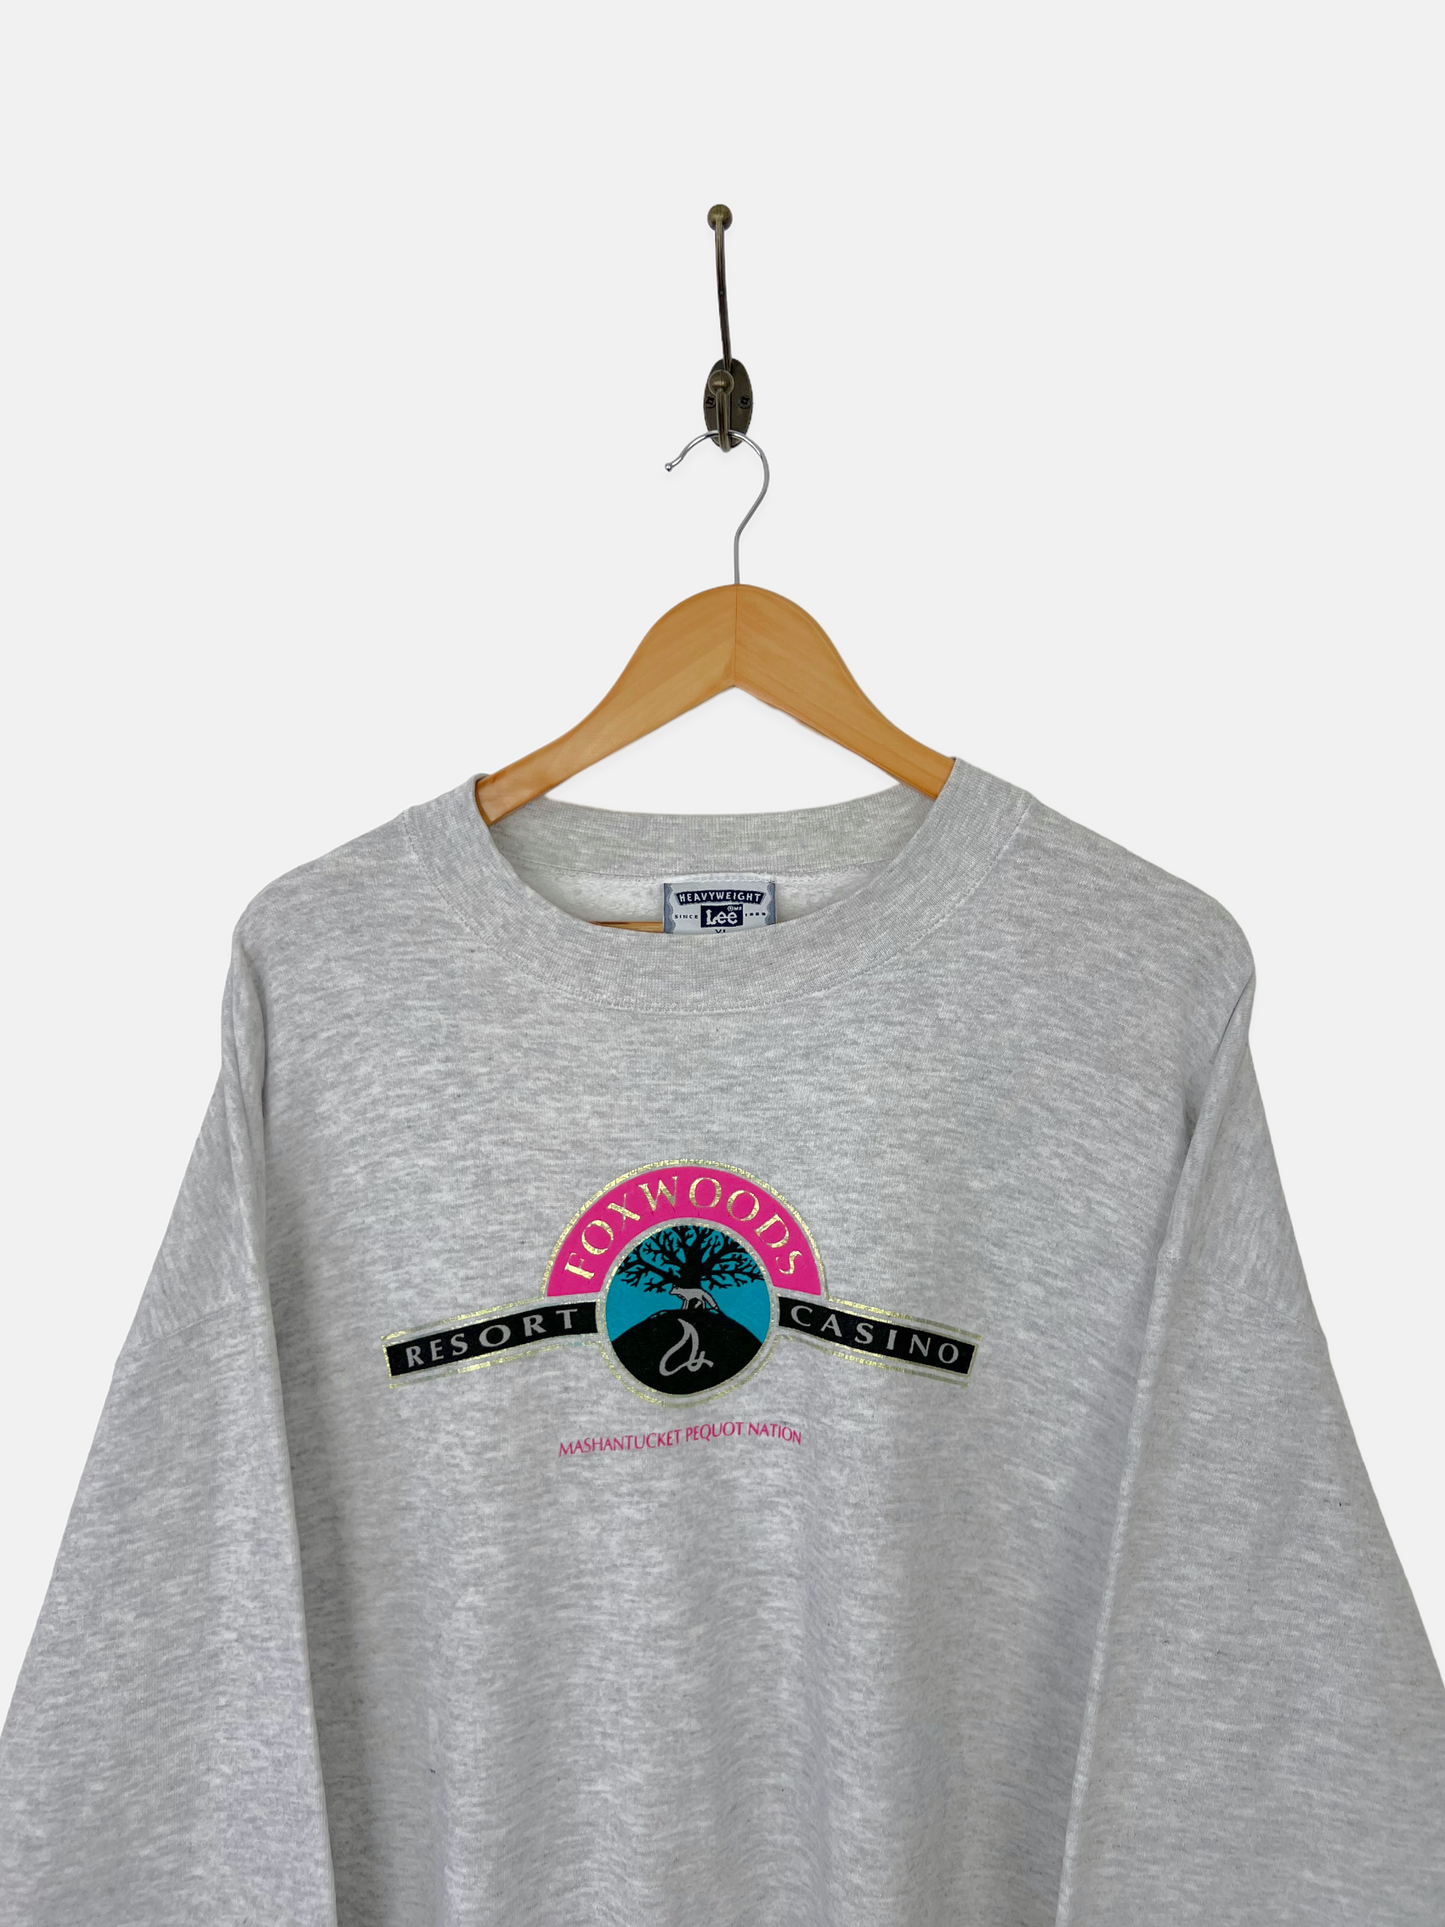 90's Foxwoods Resort & Casino USA Made Vintage Sweatshirt Size XL